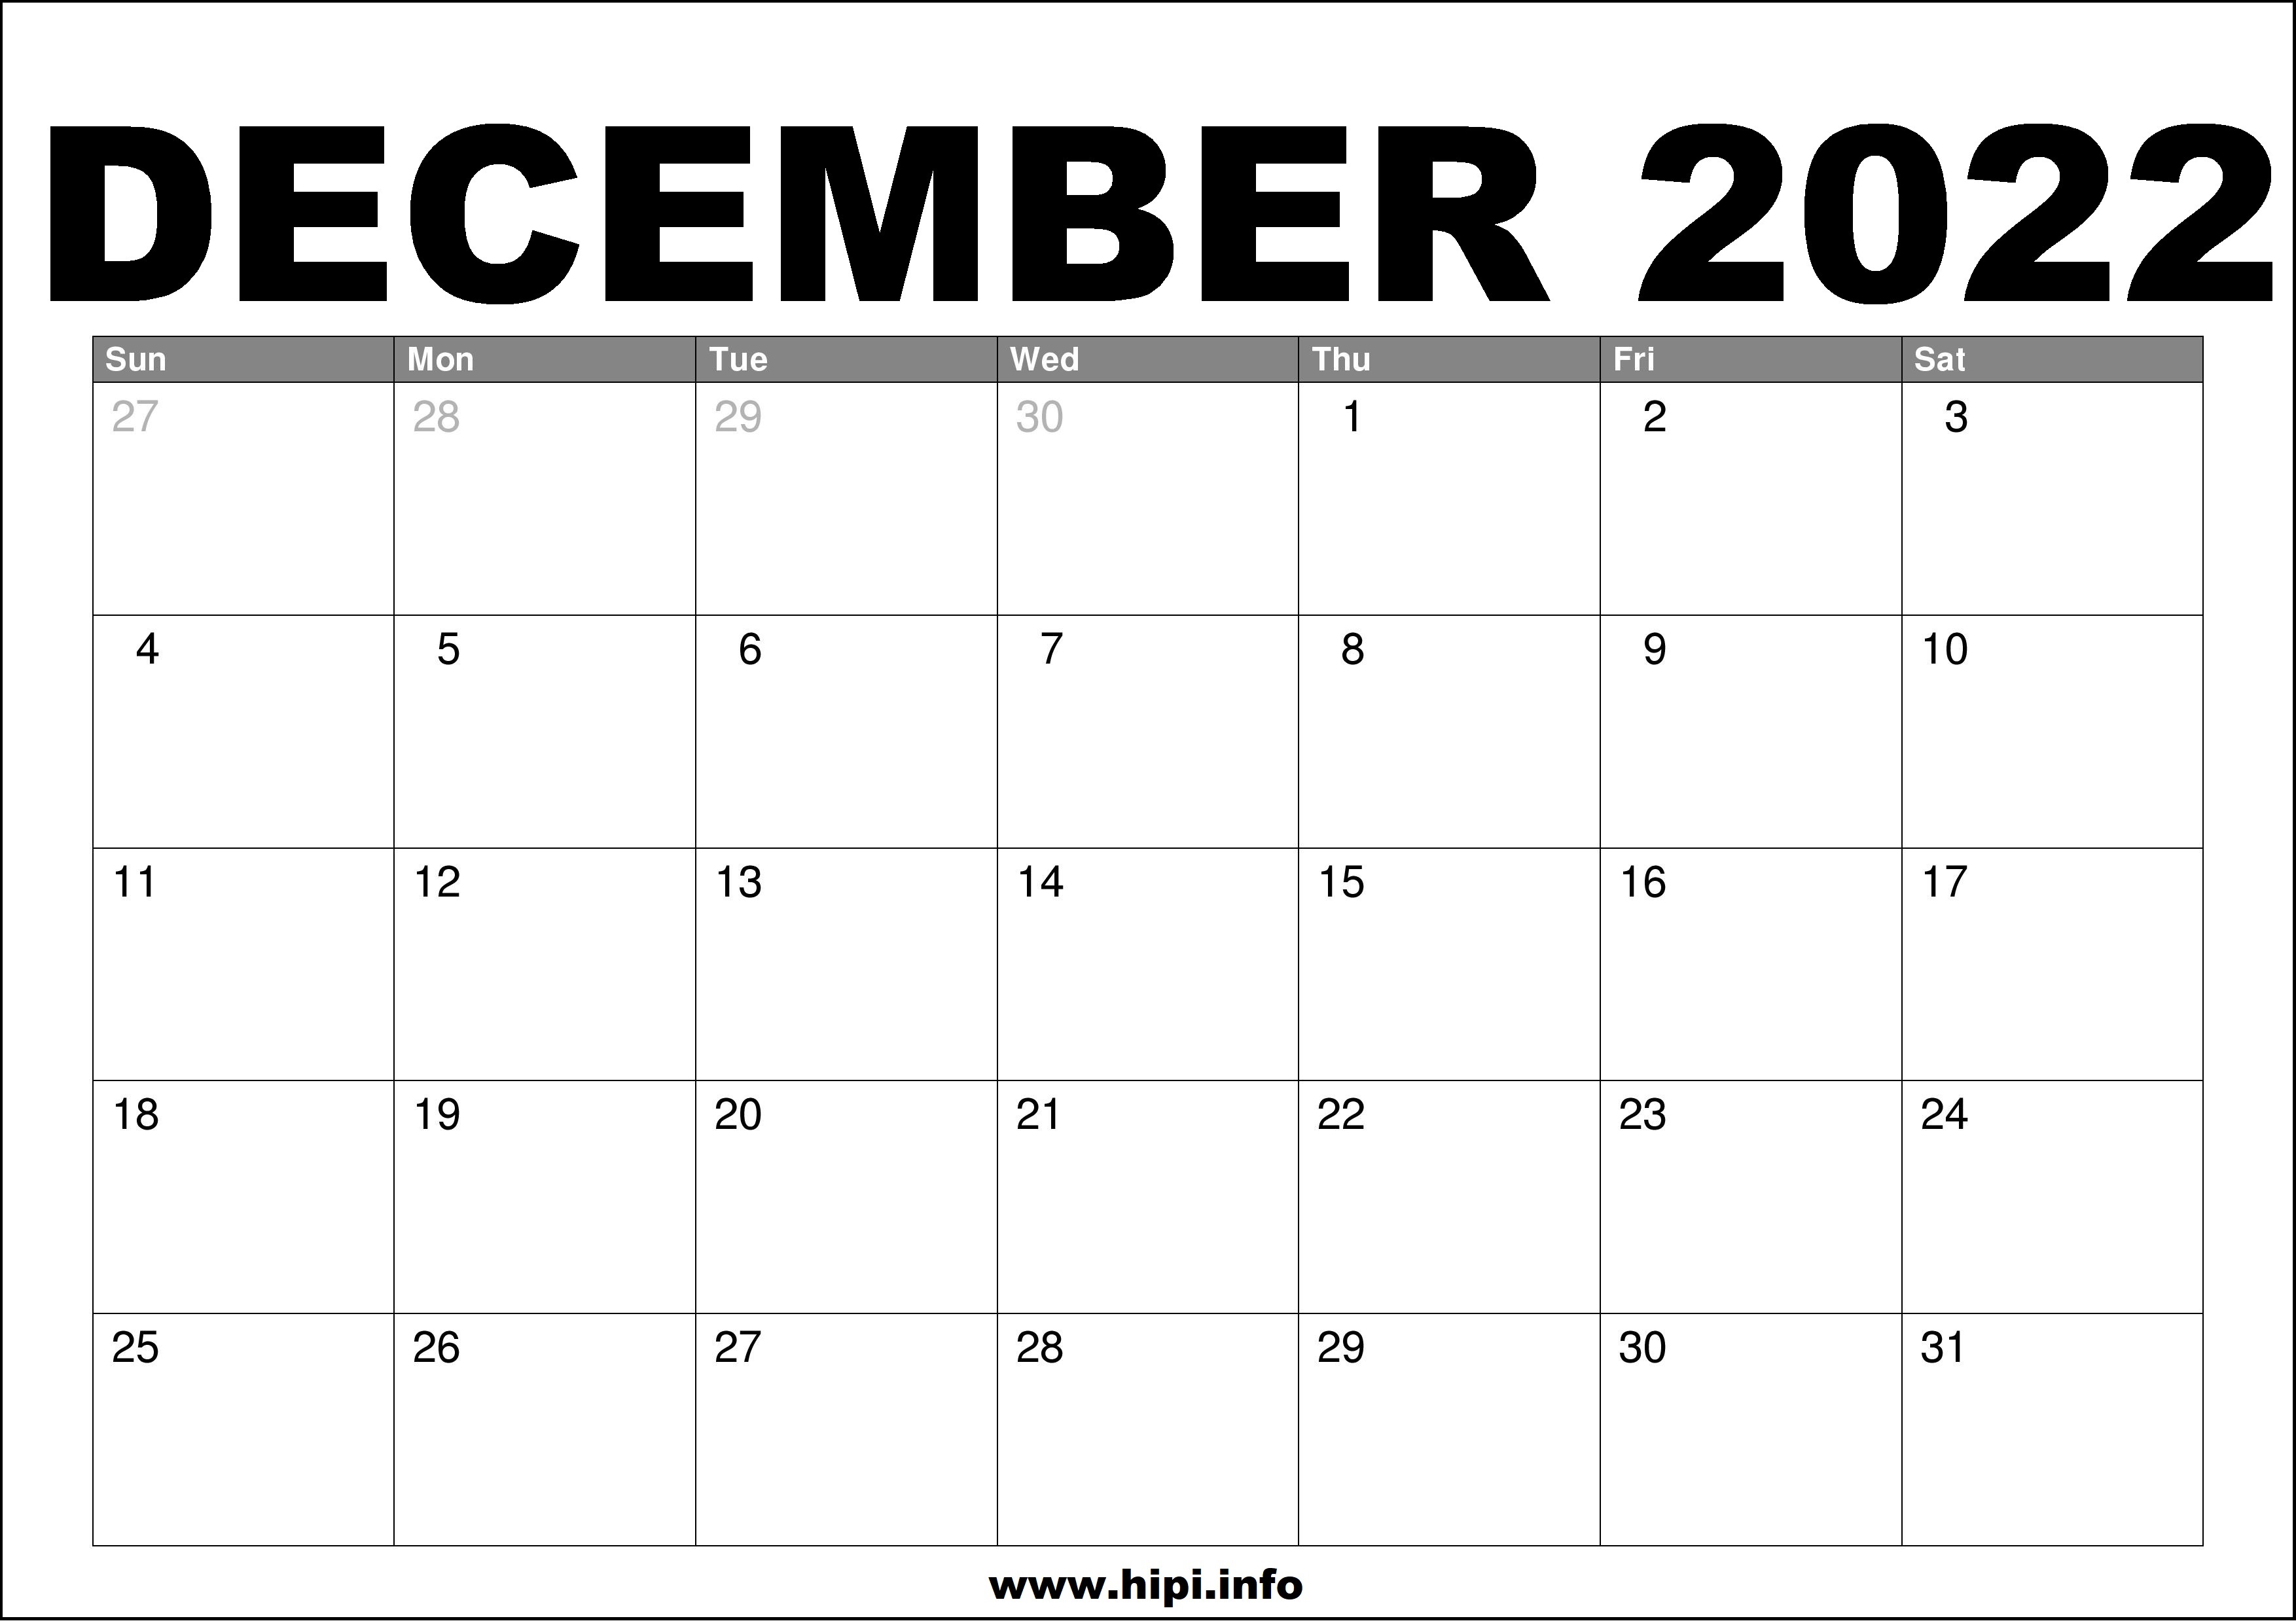 Dec 2022 Calendar December 2022 Calendar Printable Free - Hipi.info | Calendars Printable Free